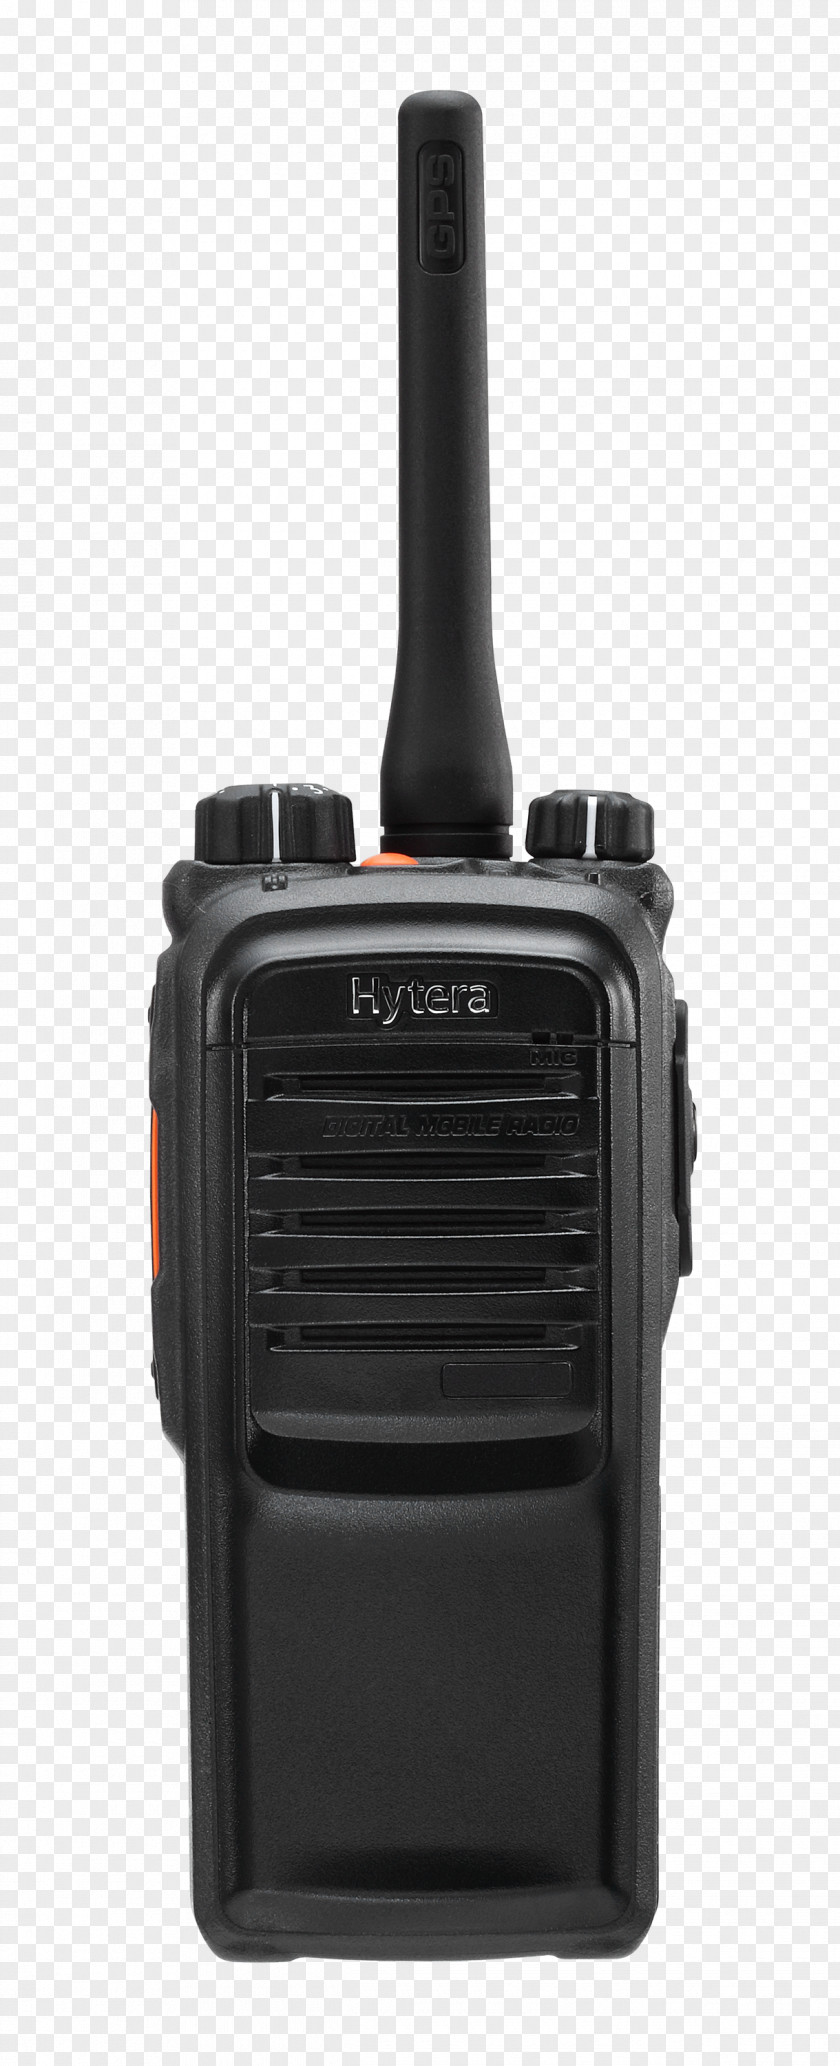 Hytera Handheld Two-Way Radios Digital Mobile Radio Station PNG